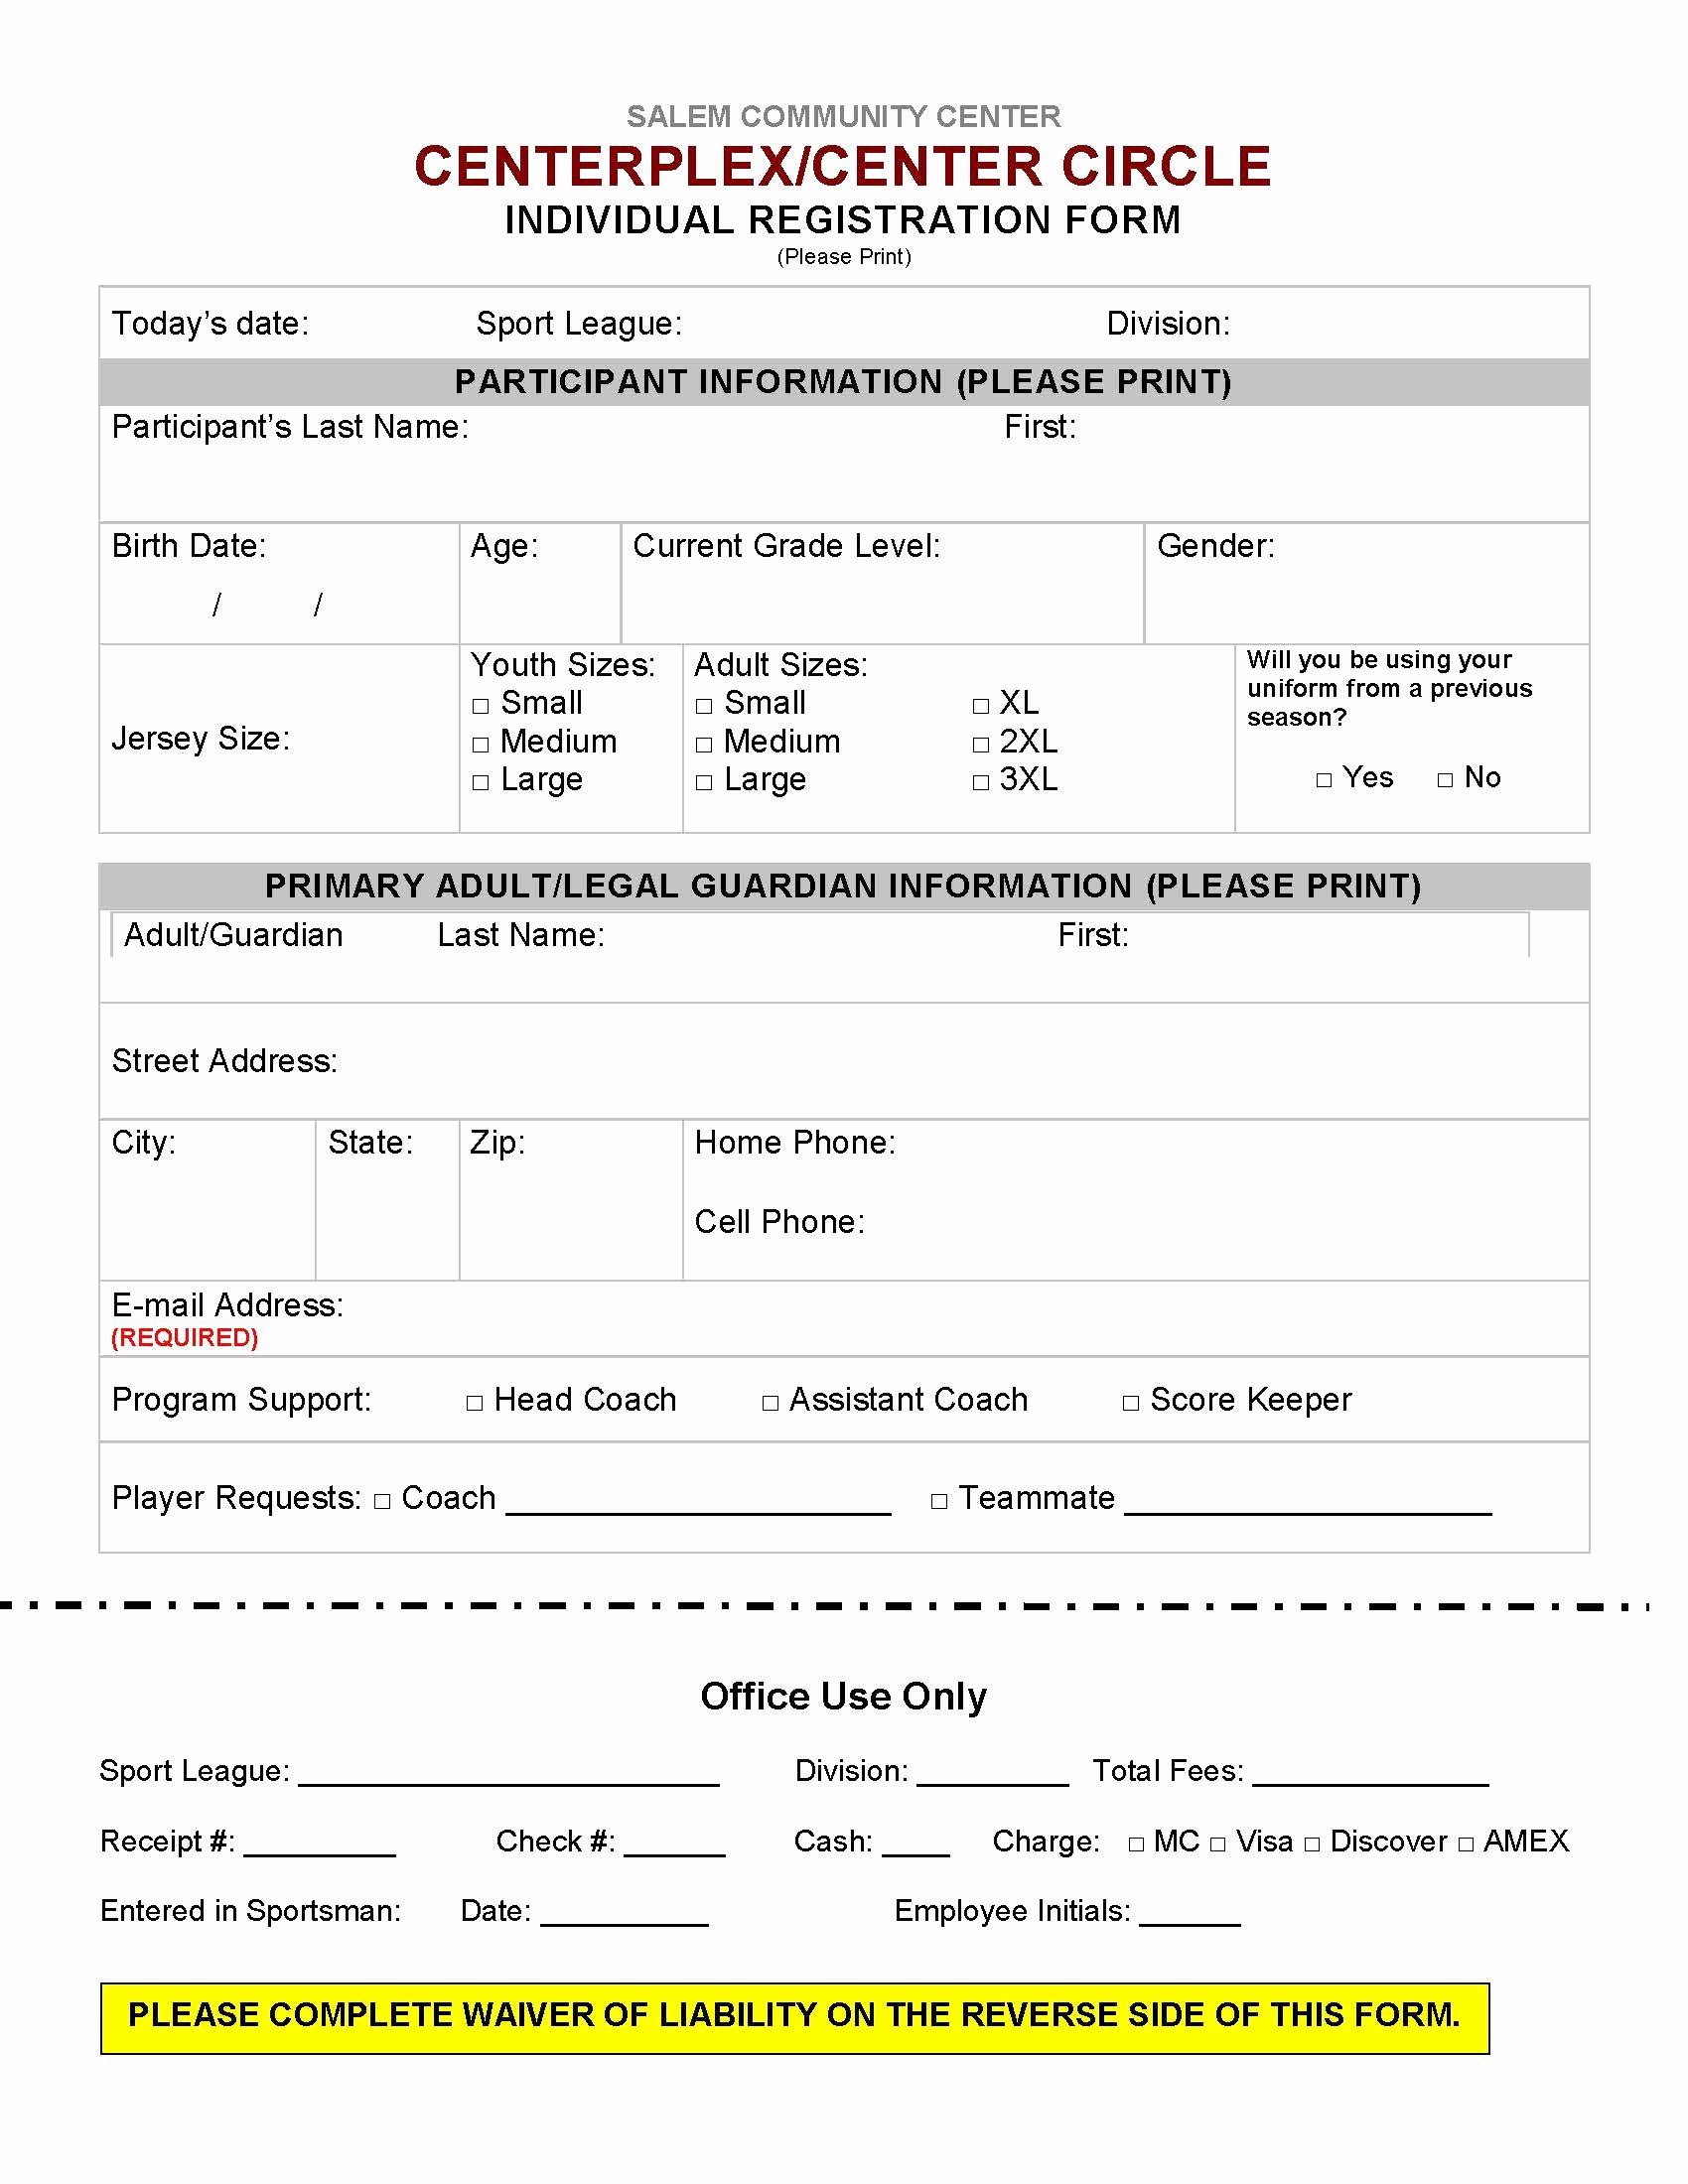 Baseball Registration form Template Awesome Salem Munity Center Individual Sports Registration